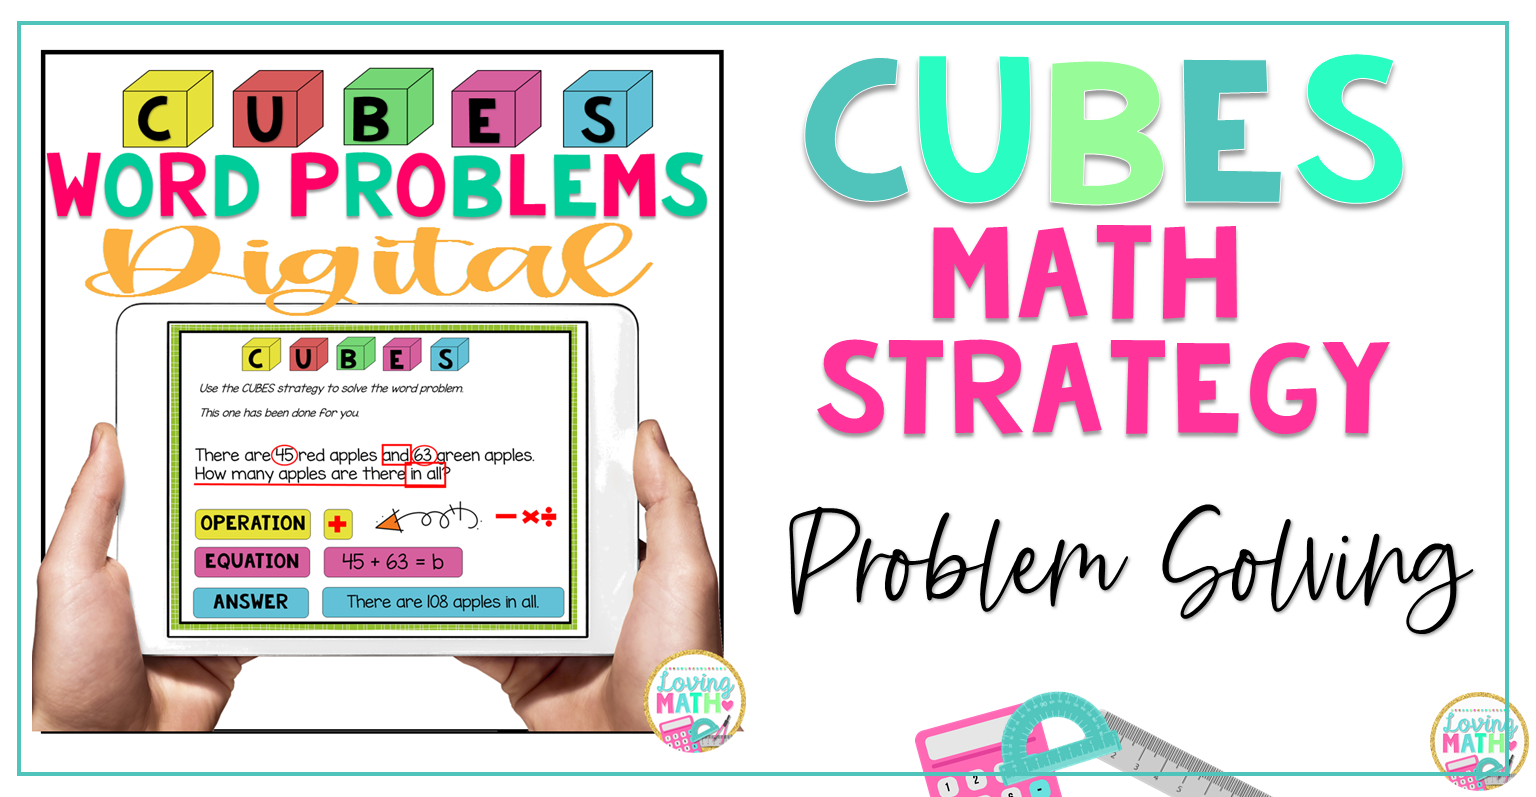 CUBES math strategy